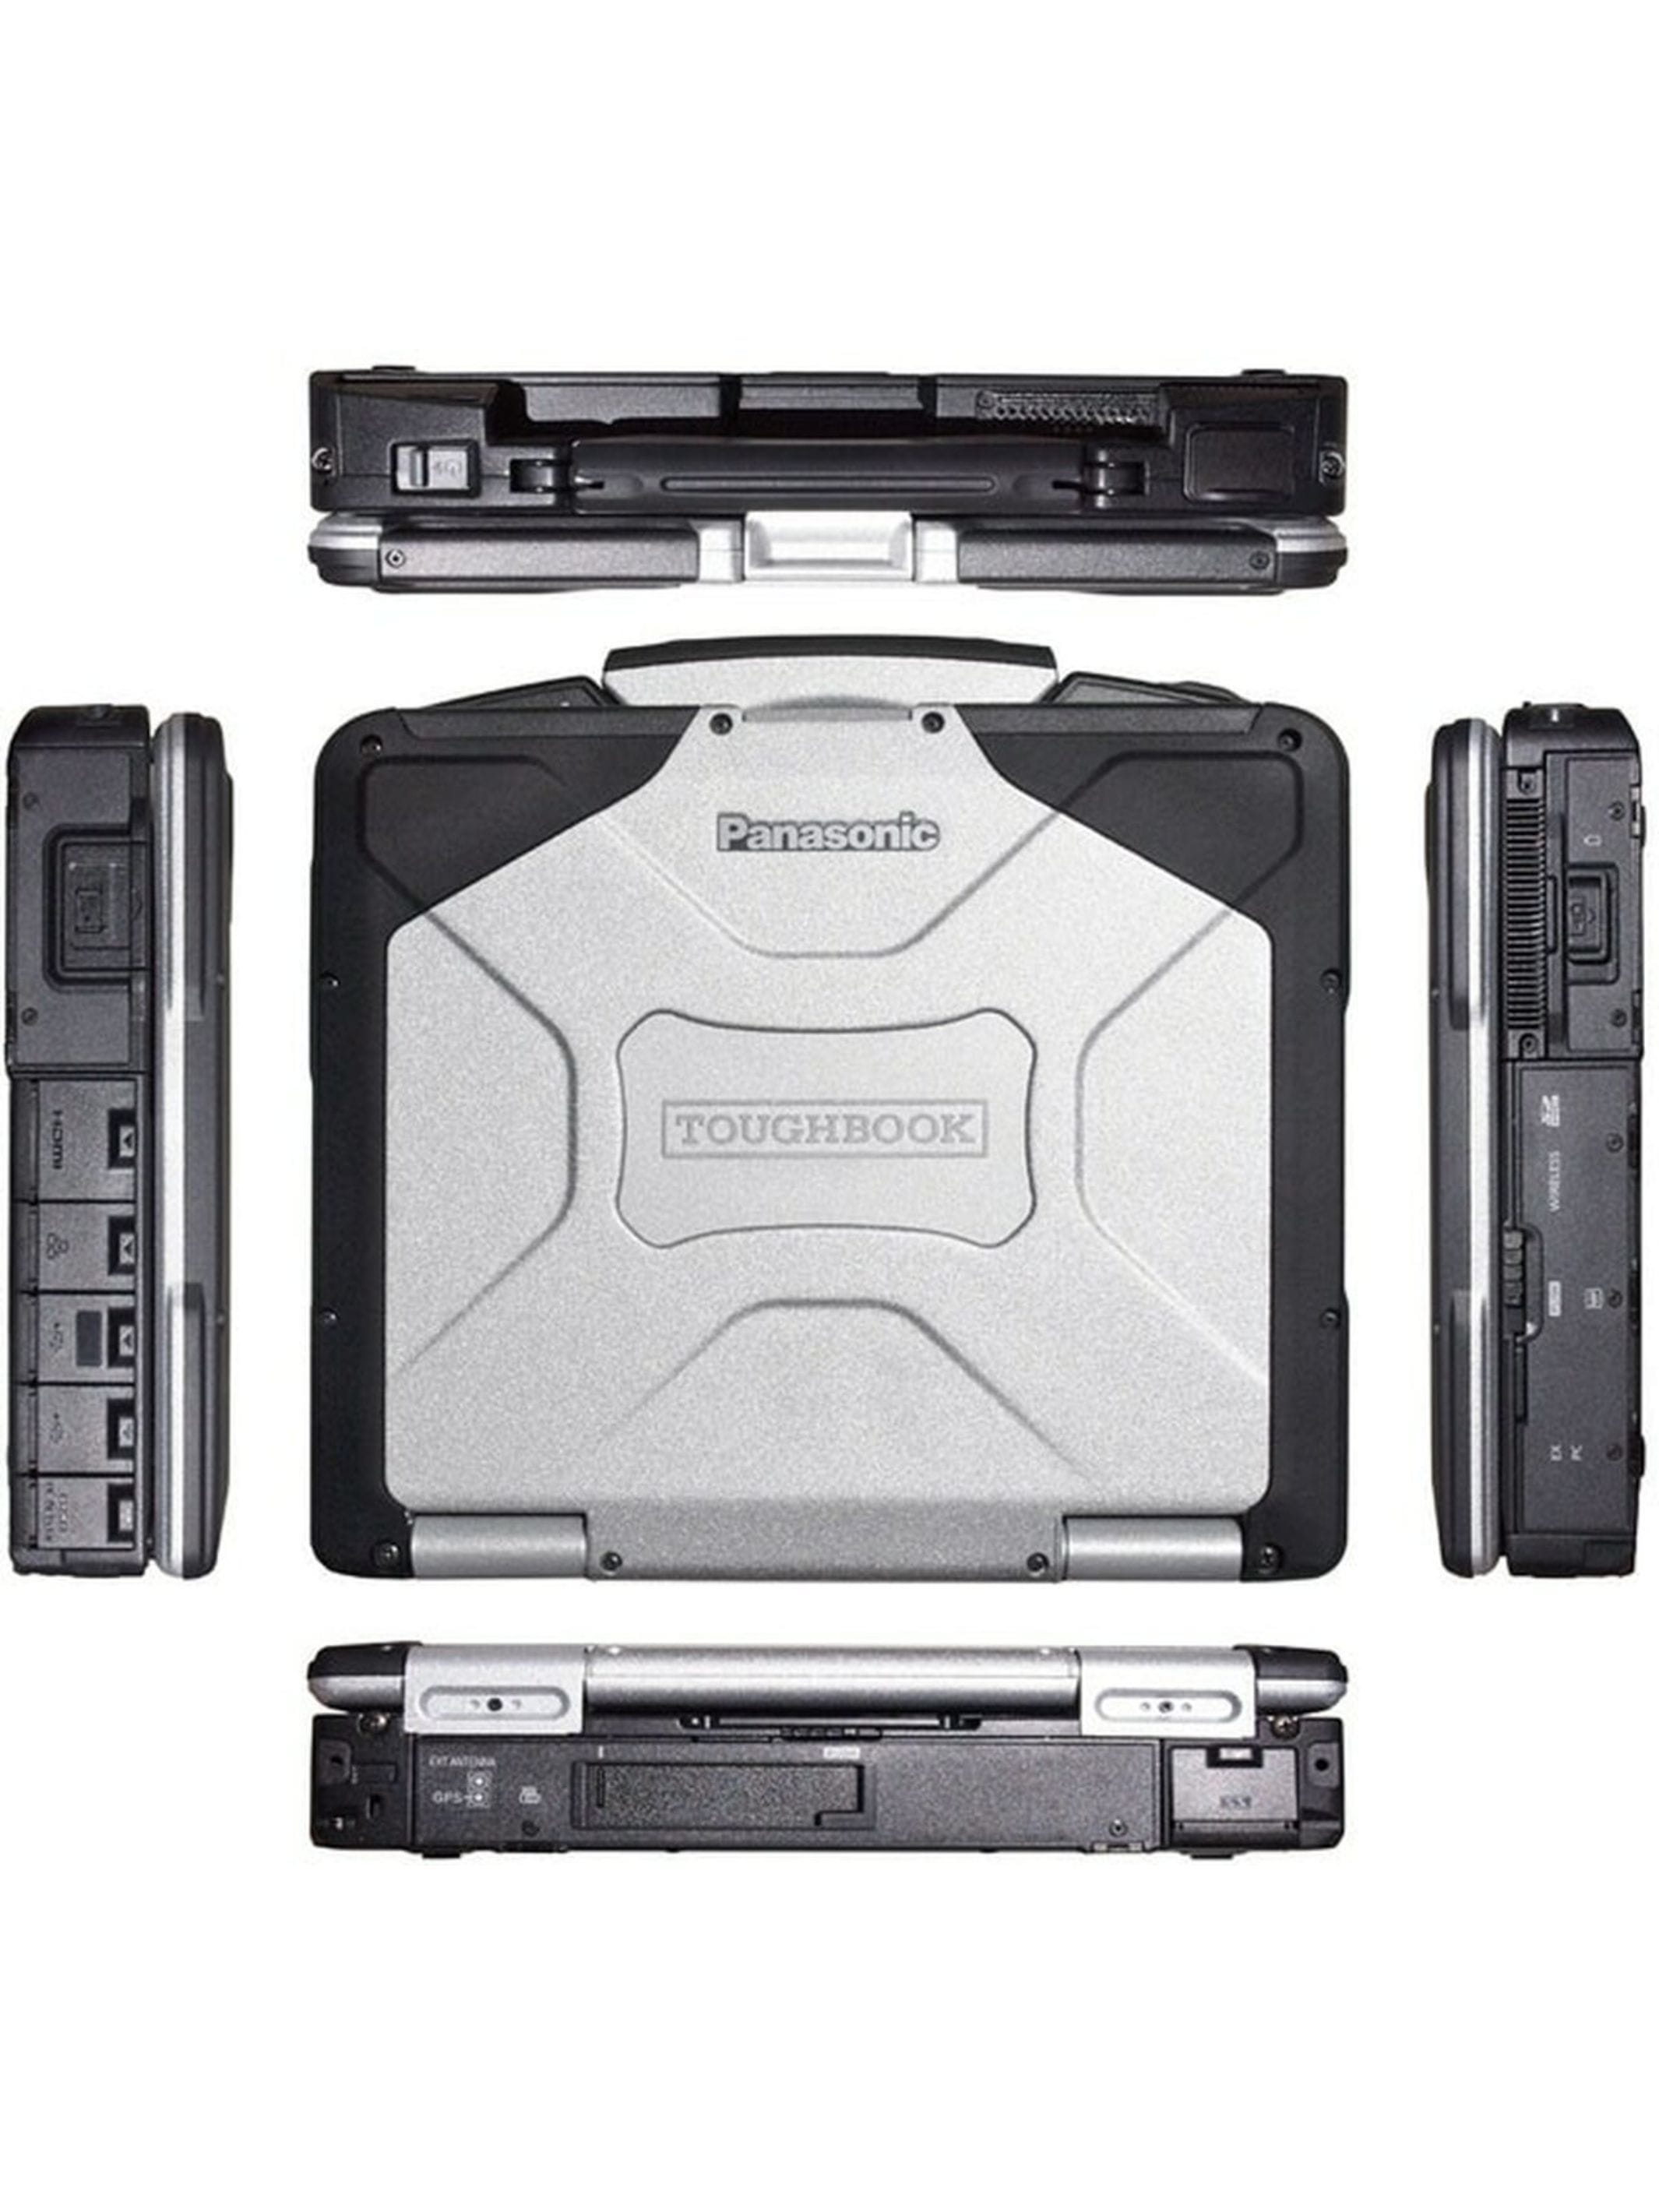 Refurbished Panasonic Toughbook CF 31